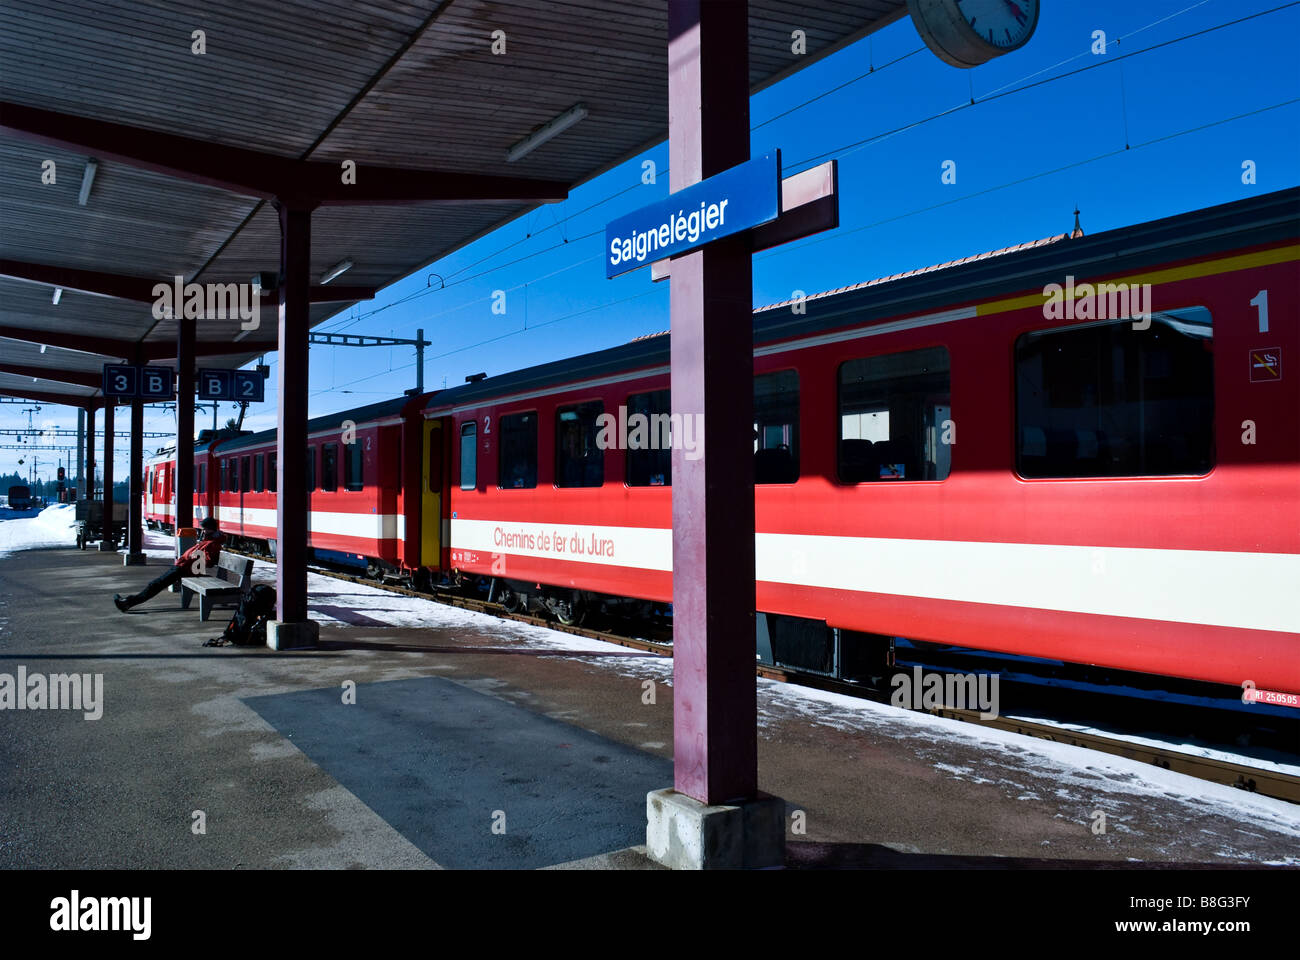 Train of the Chemins de fer du Jura in the station at Saignelegier Switzerland. Charles Lupica Stock Photo